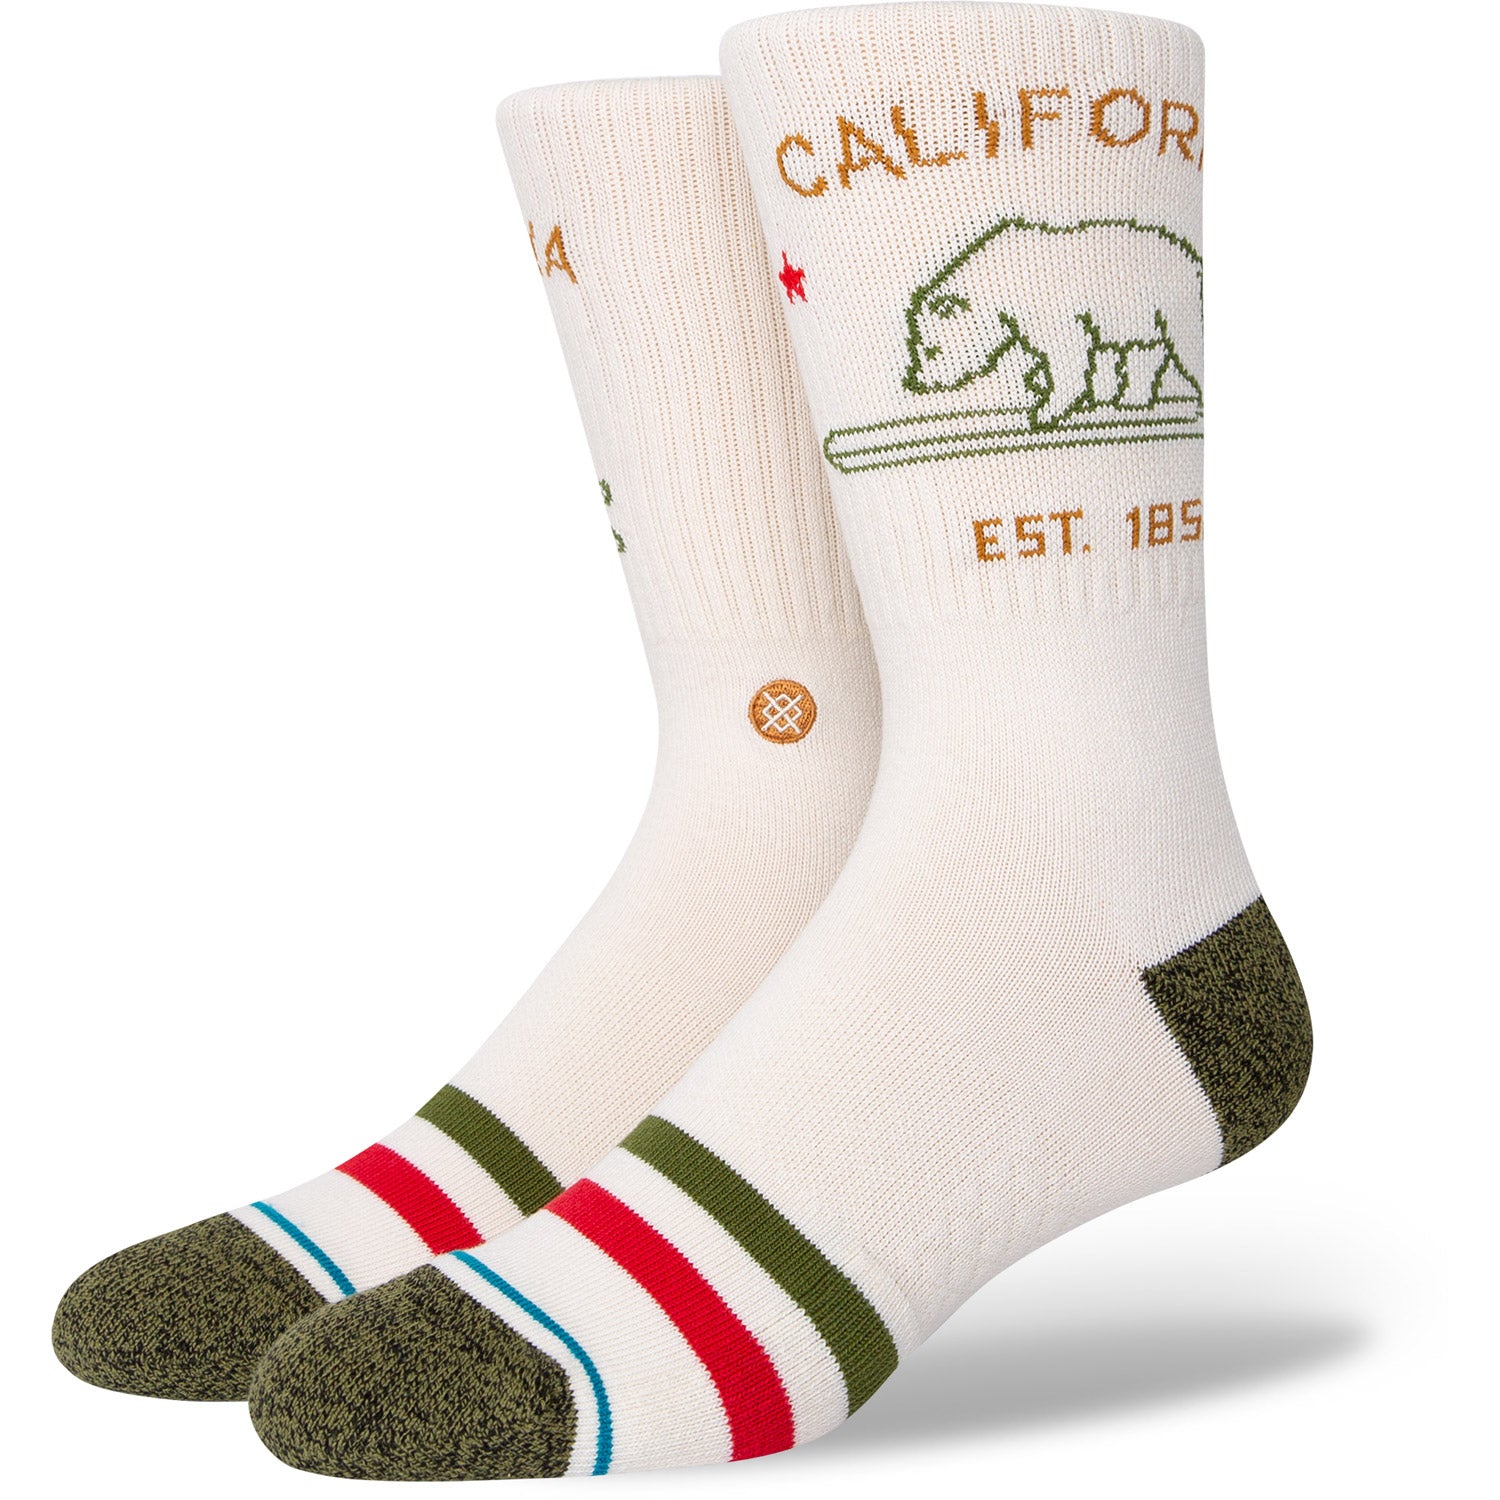 California Republic 2 Crew Sock